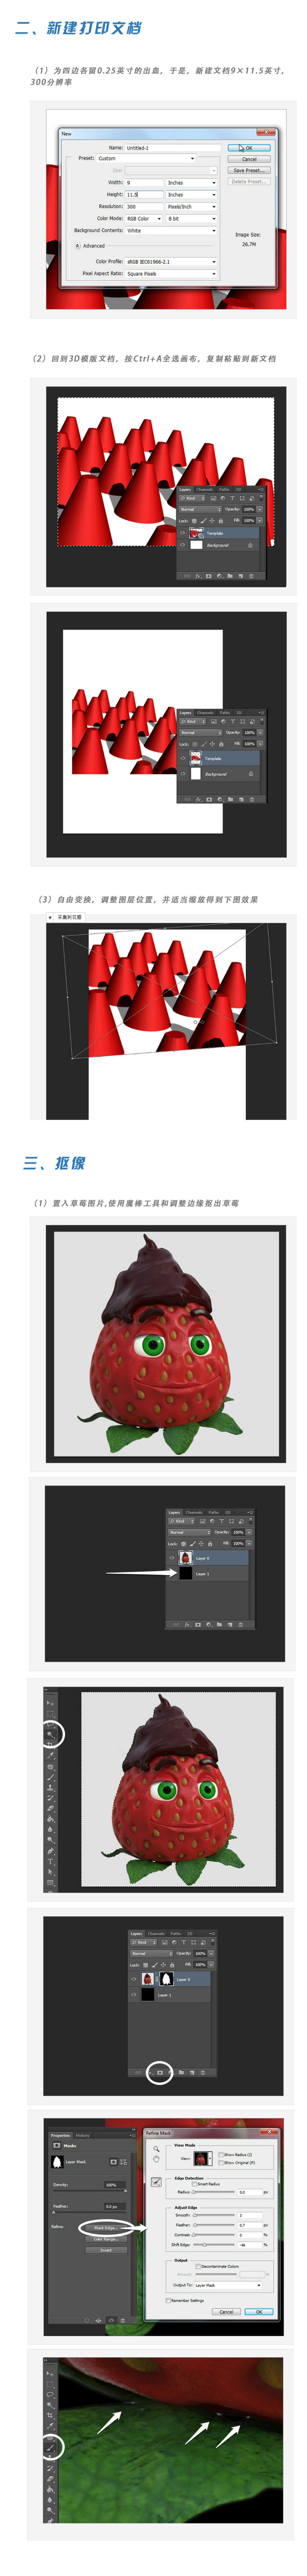 PhotoShop另类创意草莓甜点3D平面广告设计制作教程3